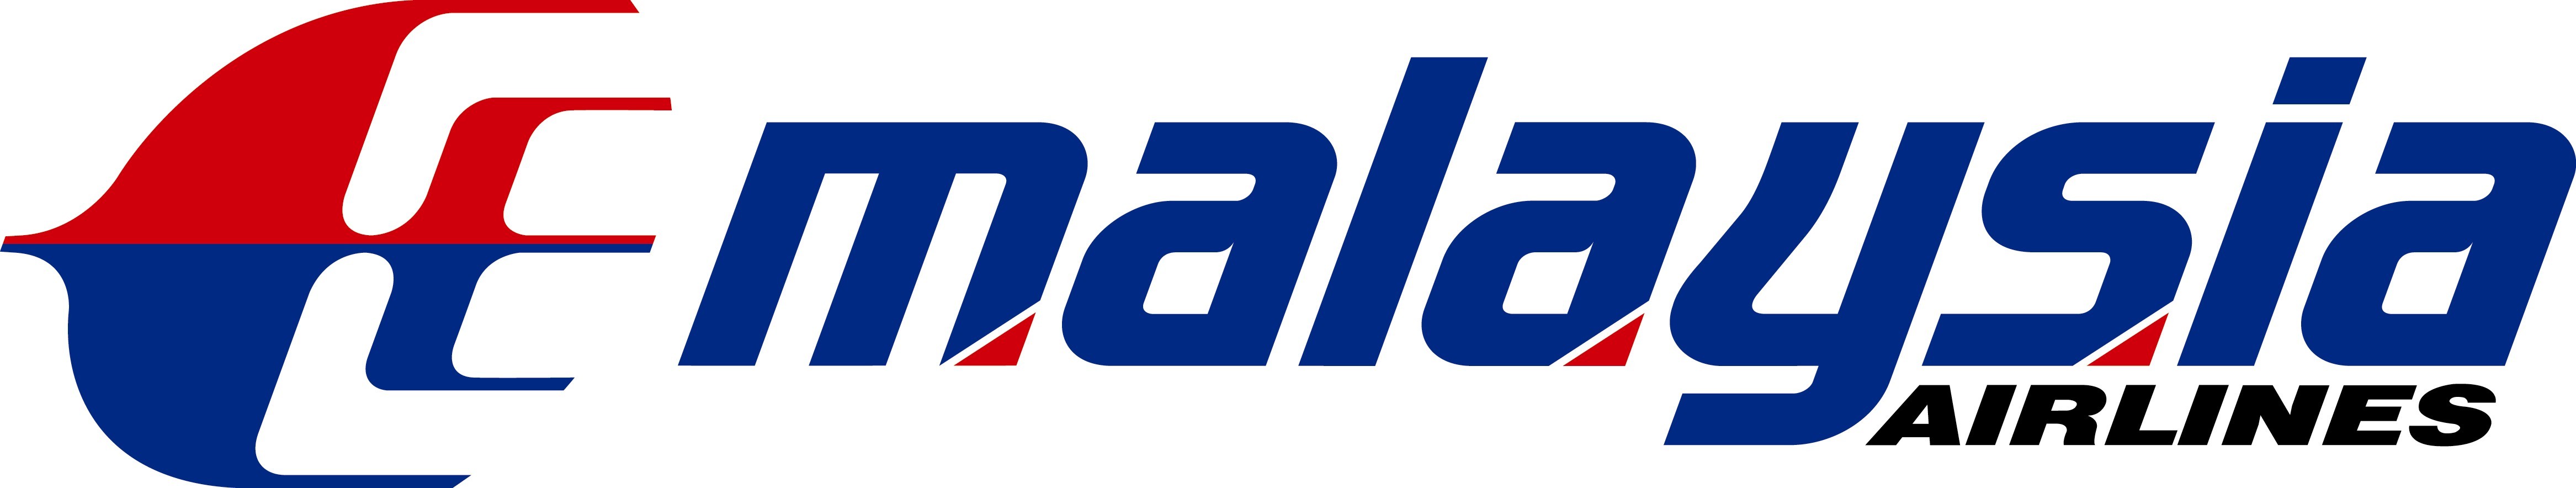 Malaysia Airport Logo photo - 1